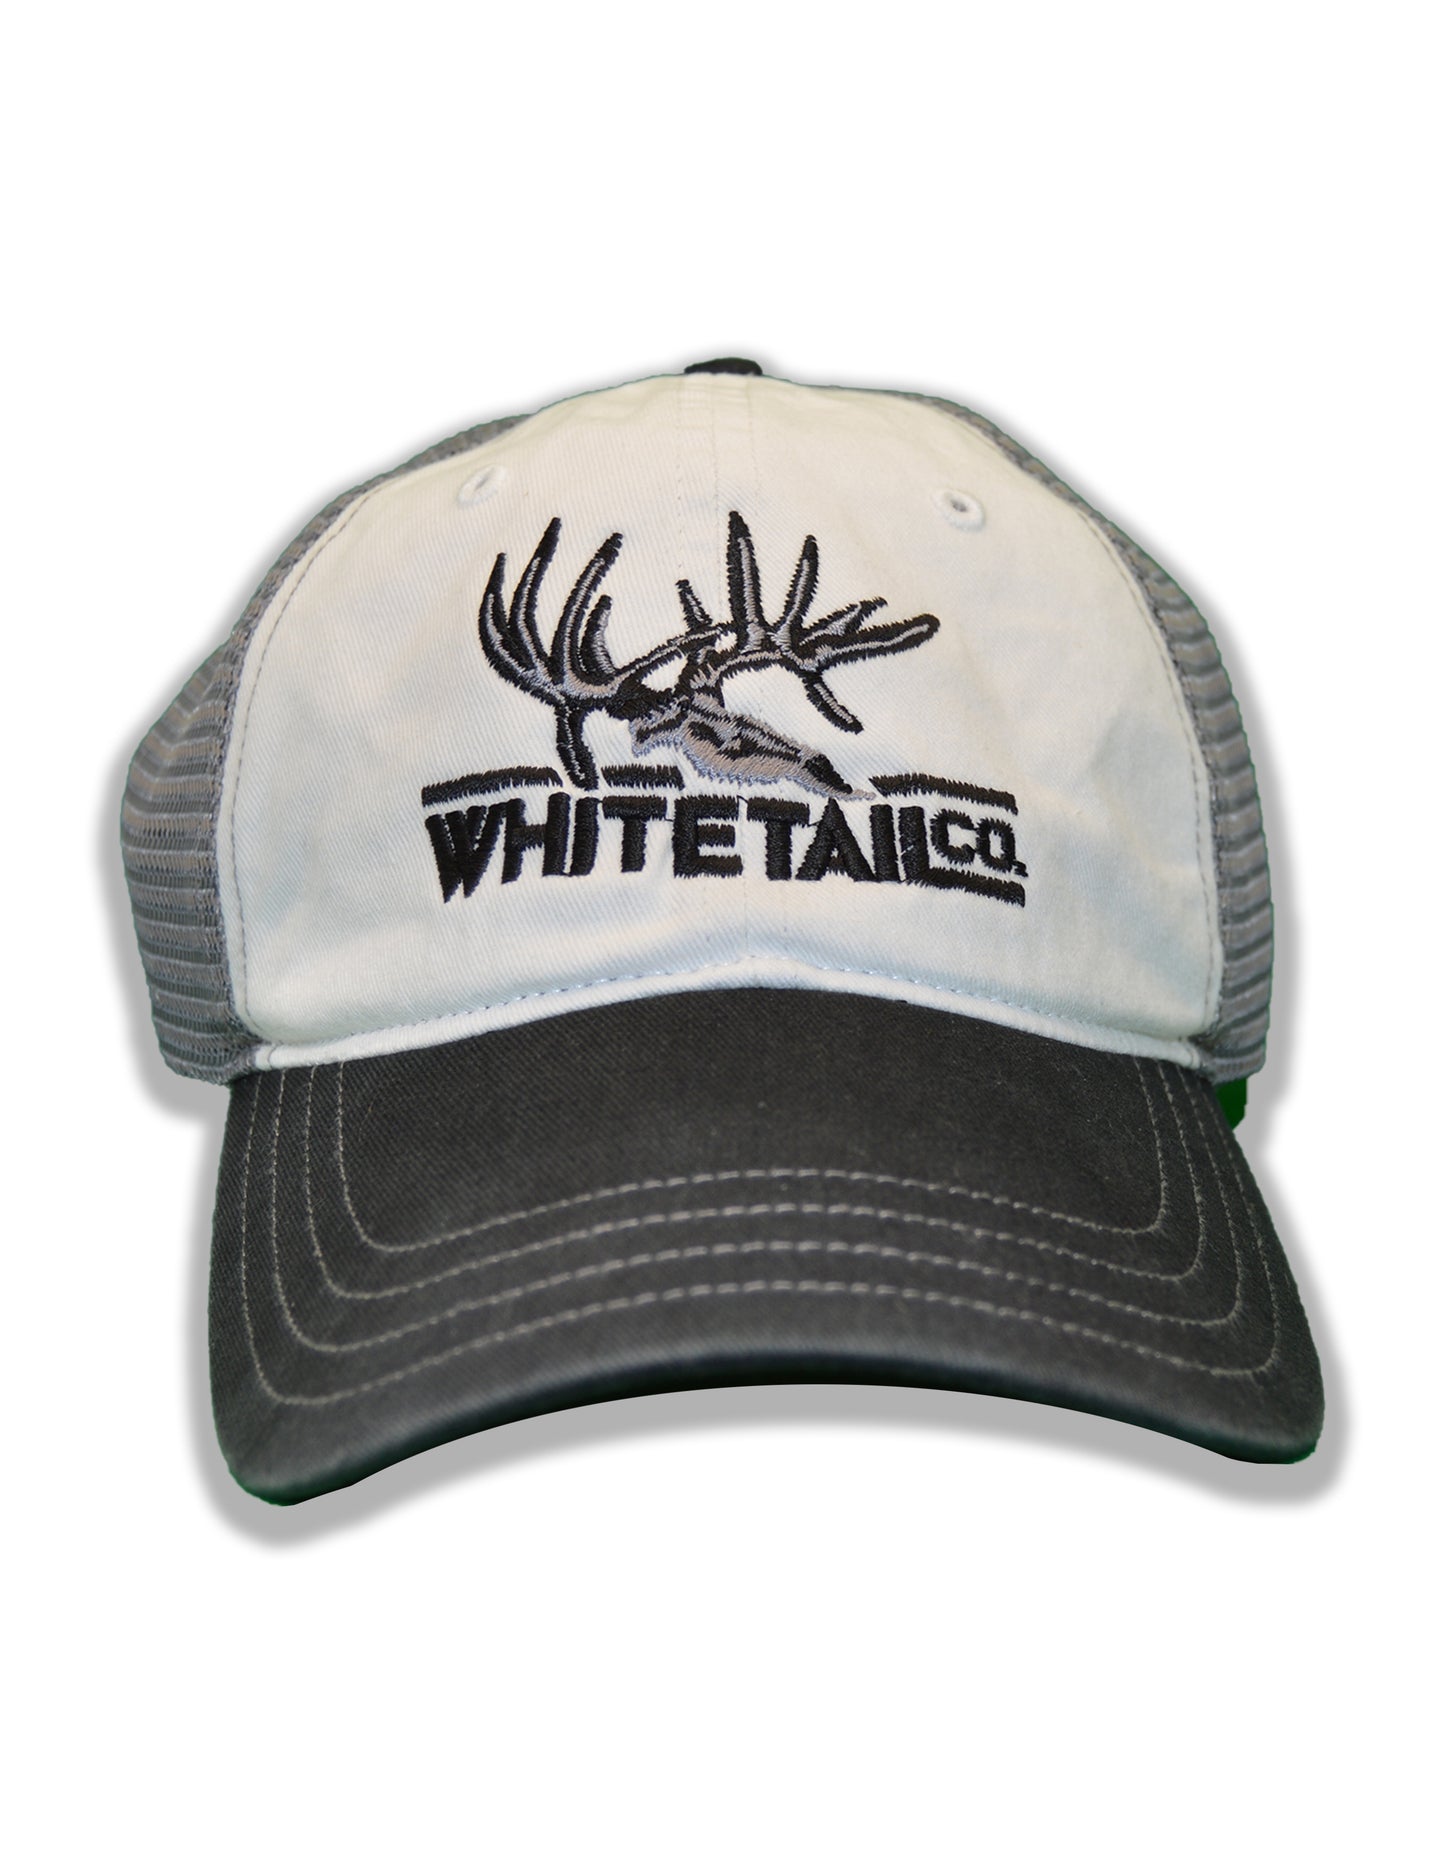 Whitetail Company Hats White/Black